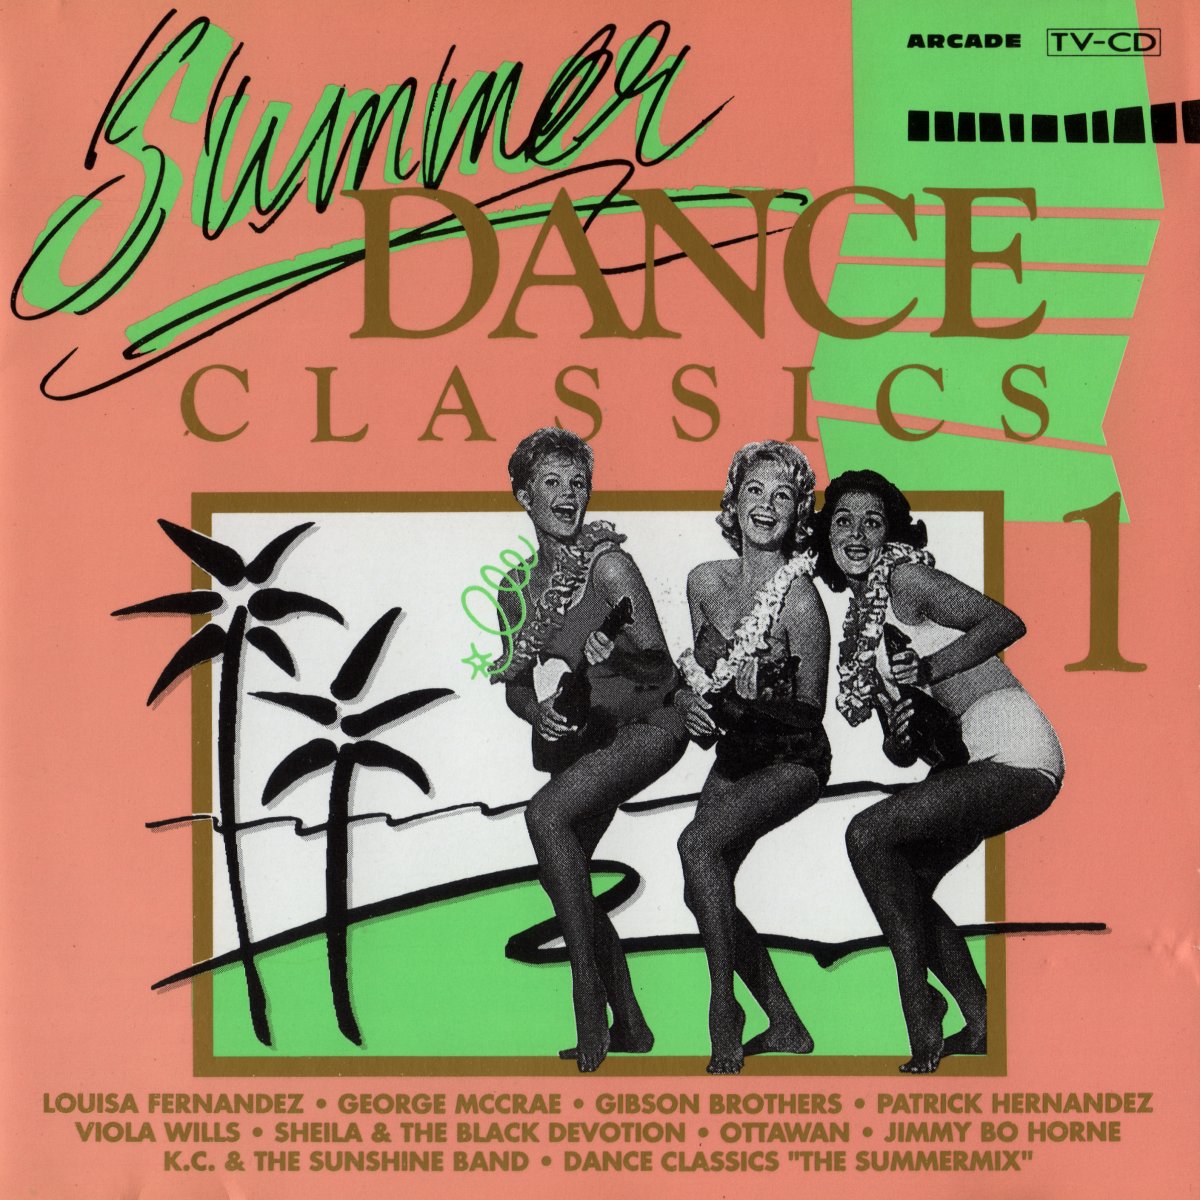 Dance Classics - Sumerdance Classics 1+ 2 (1990) (Arcade)